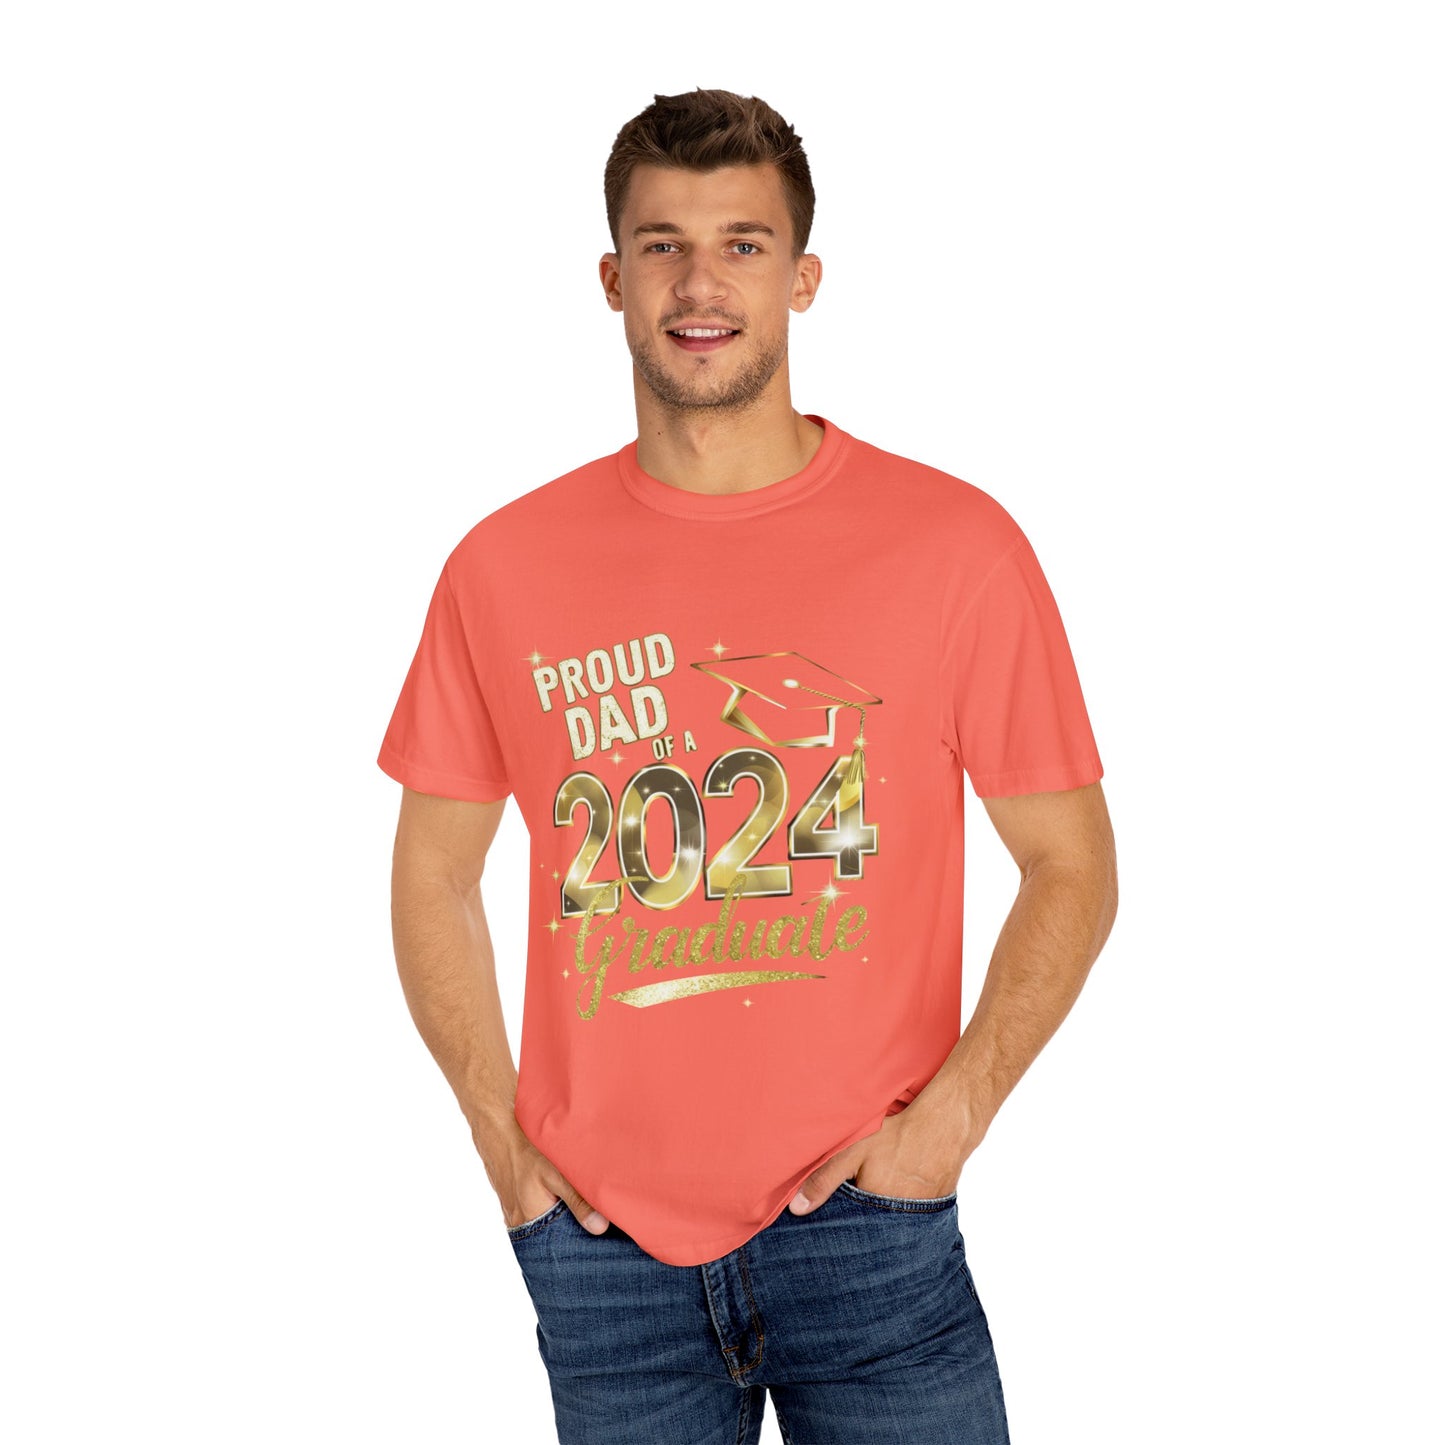 Proud of Dad 2024 Graduate Unisex Garment-dyed T-shirt Cotton Funny Humorous Graphic Soft Premium Unisex Men Women Bright Salmon T-shirt Birthday Gift-33